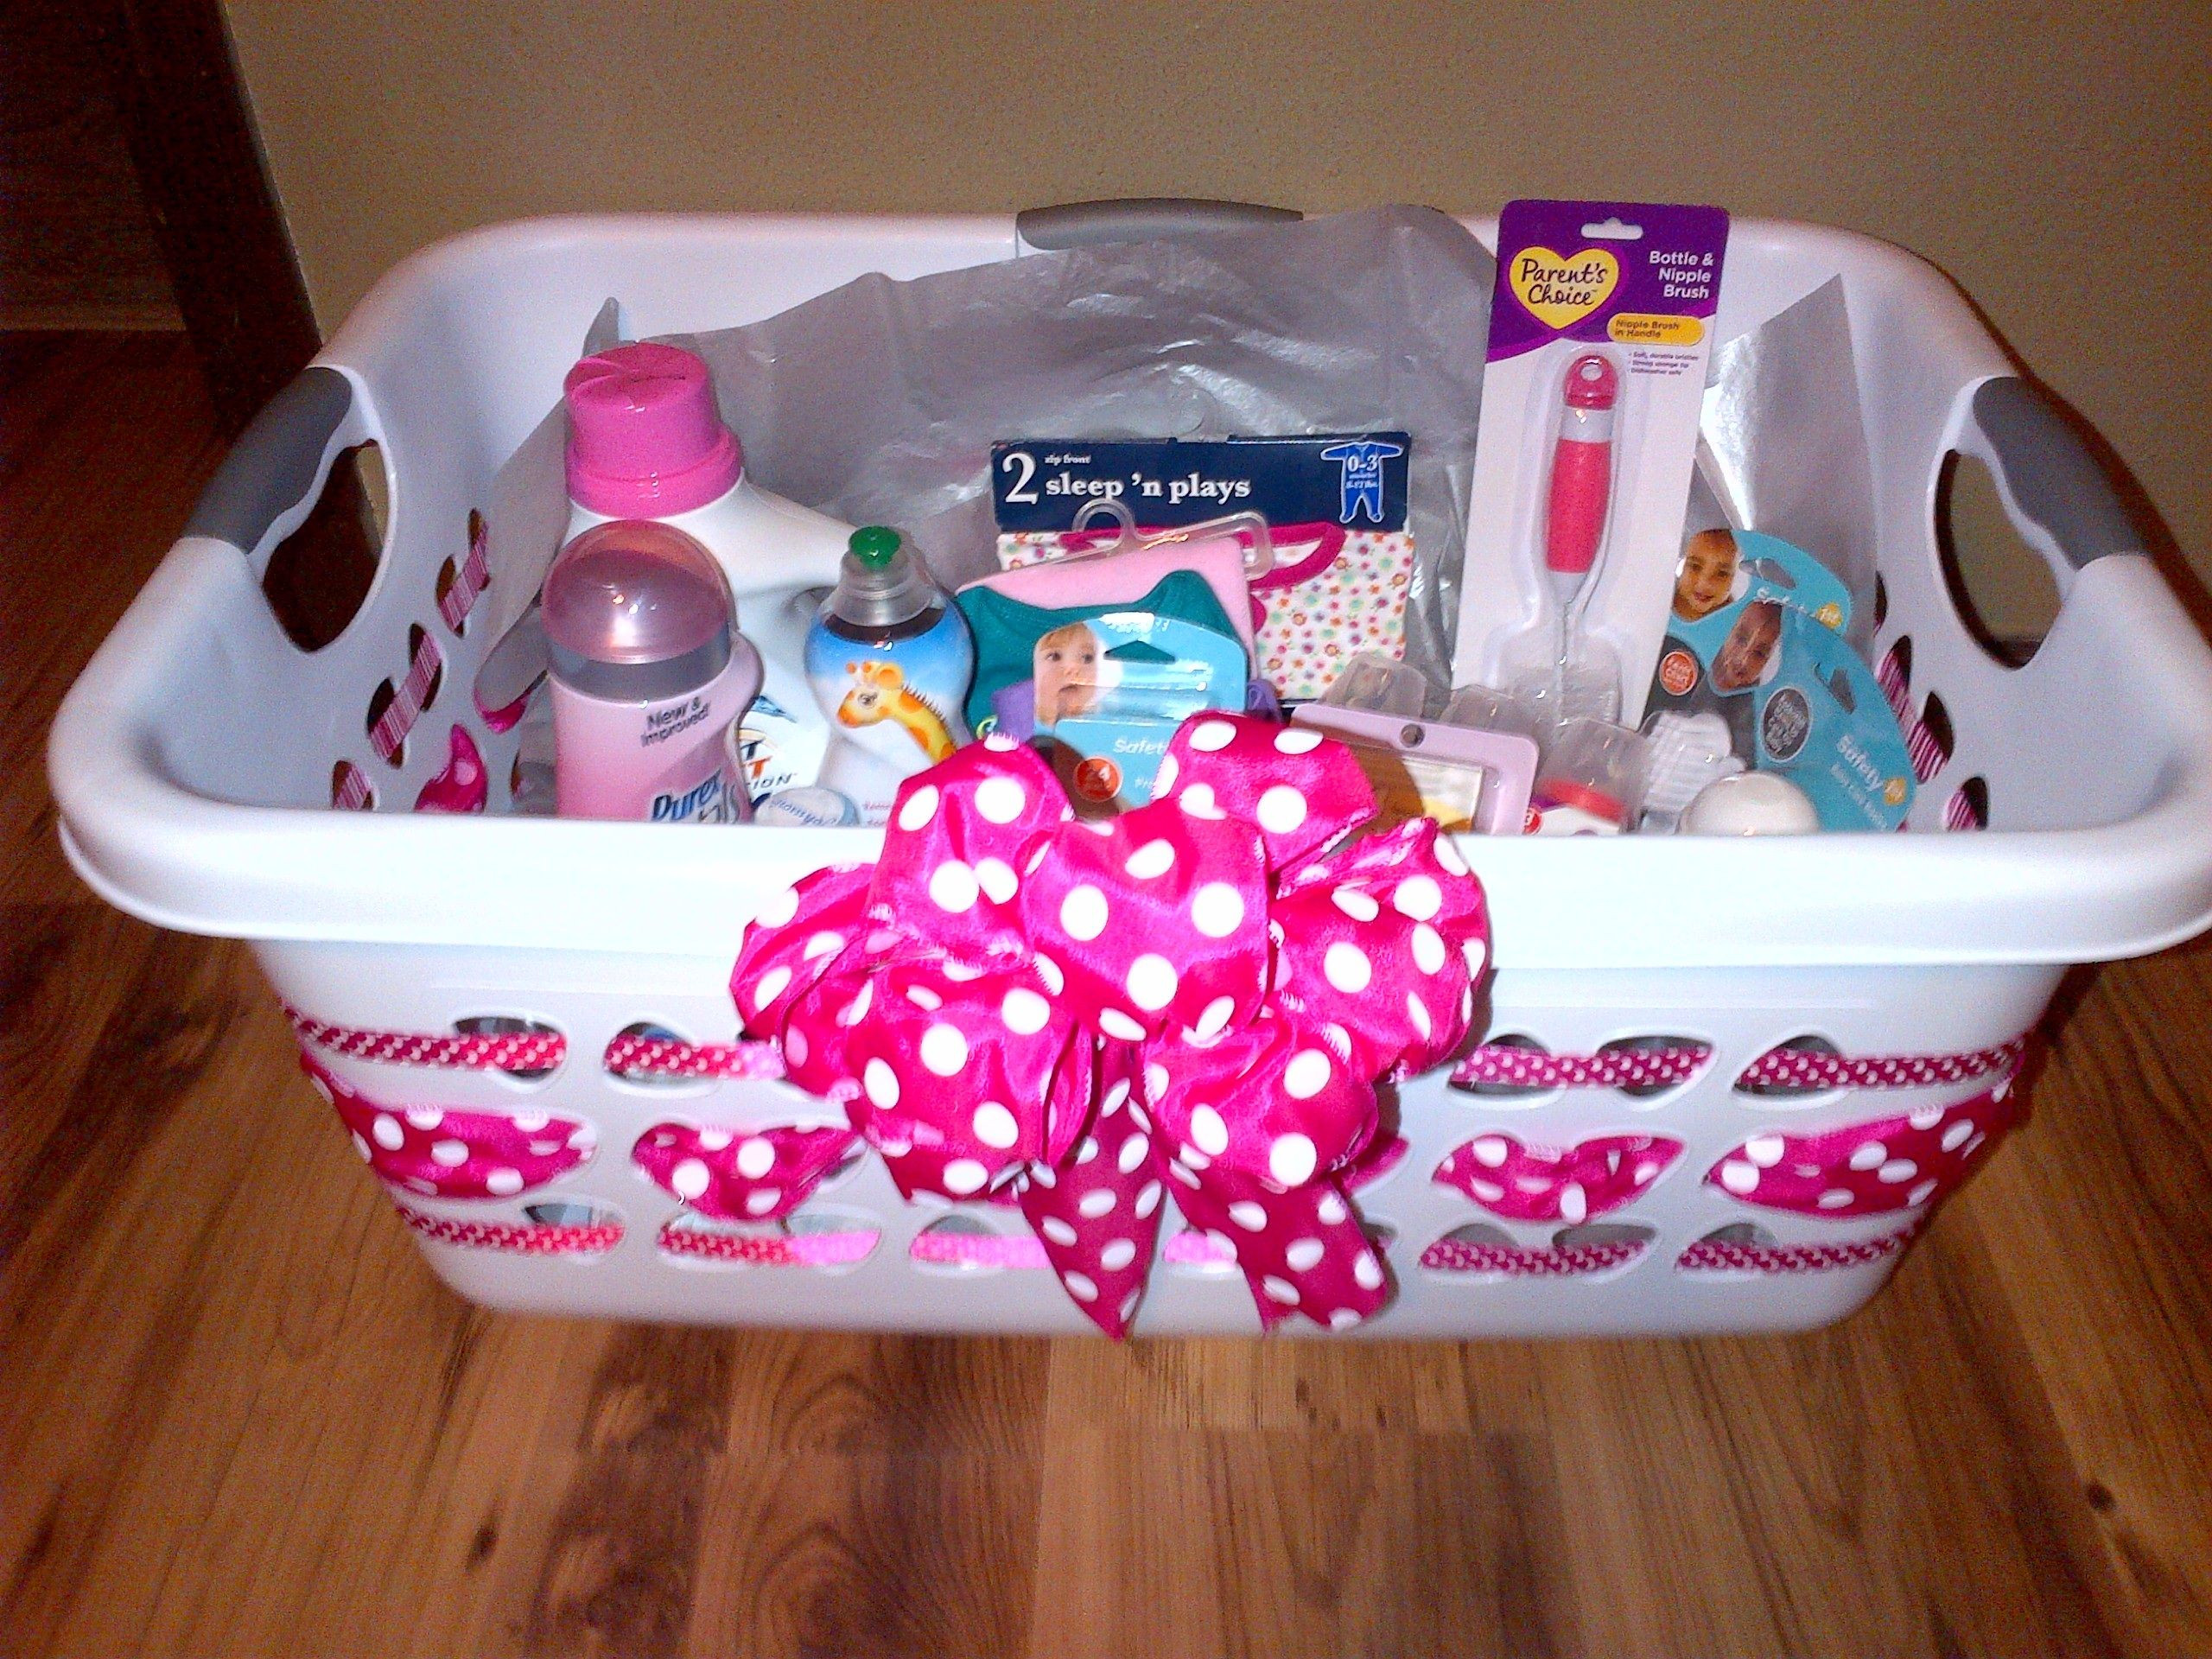 Pinterest Baby Shower Gift Ideas
 Laundry basket baby ts Gift ideas Pinterest